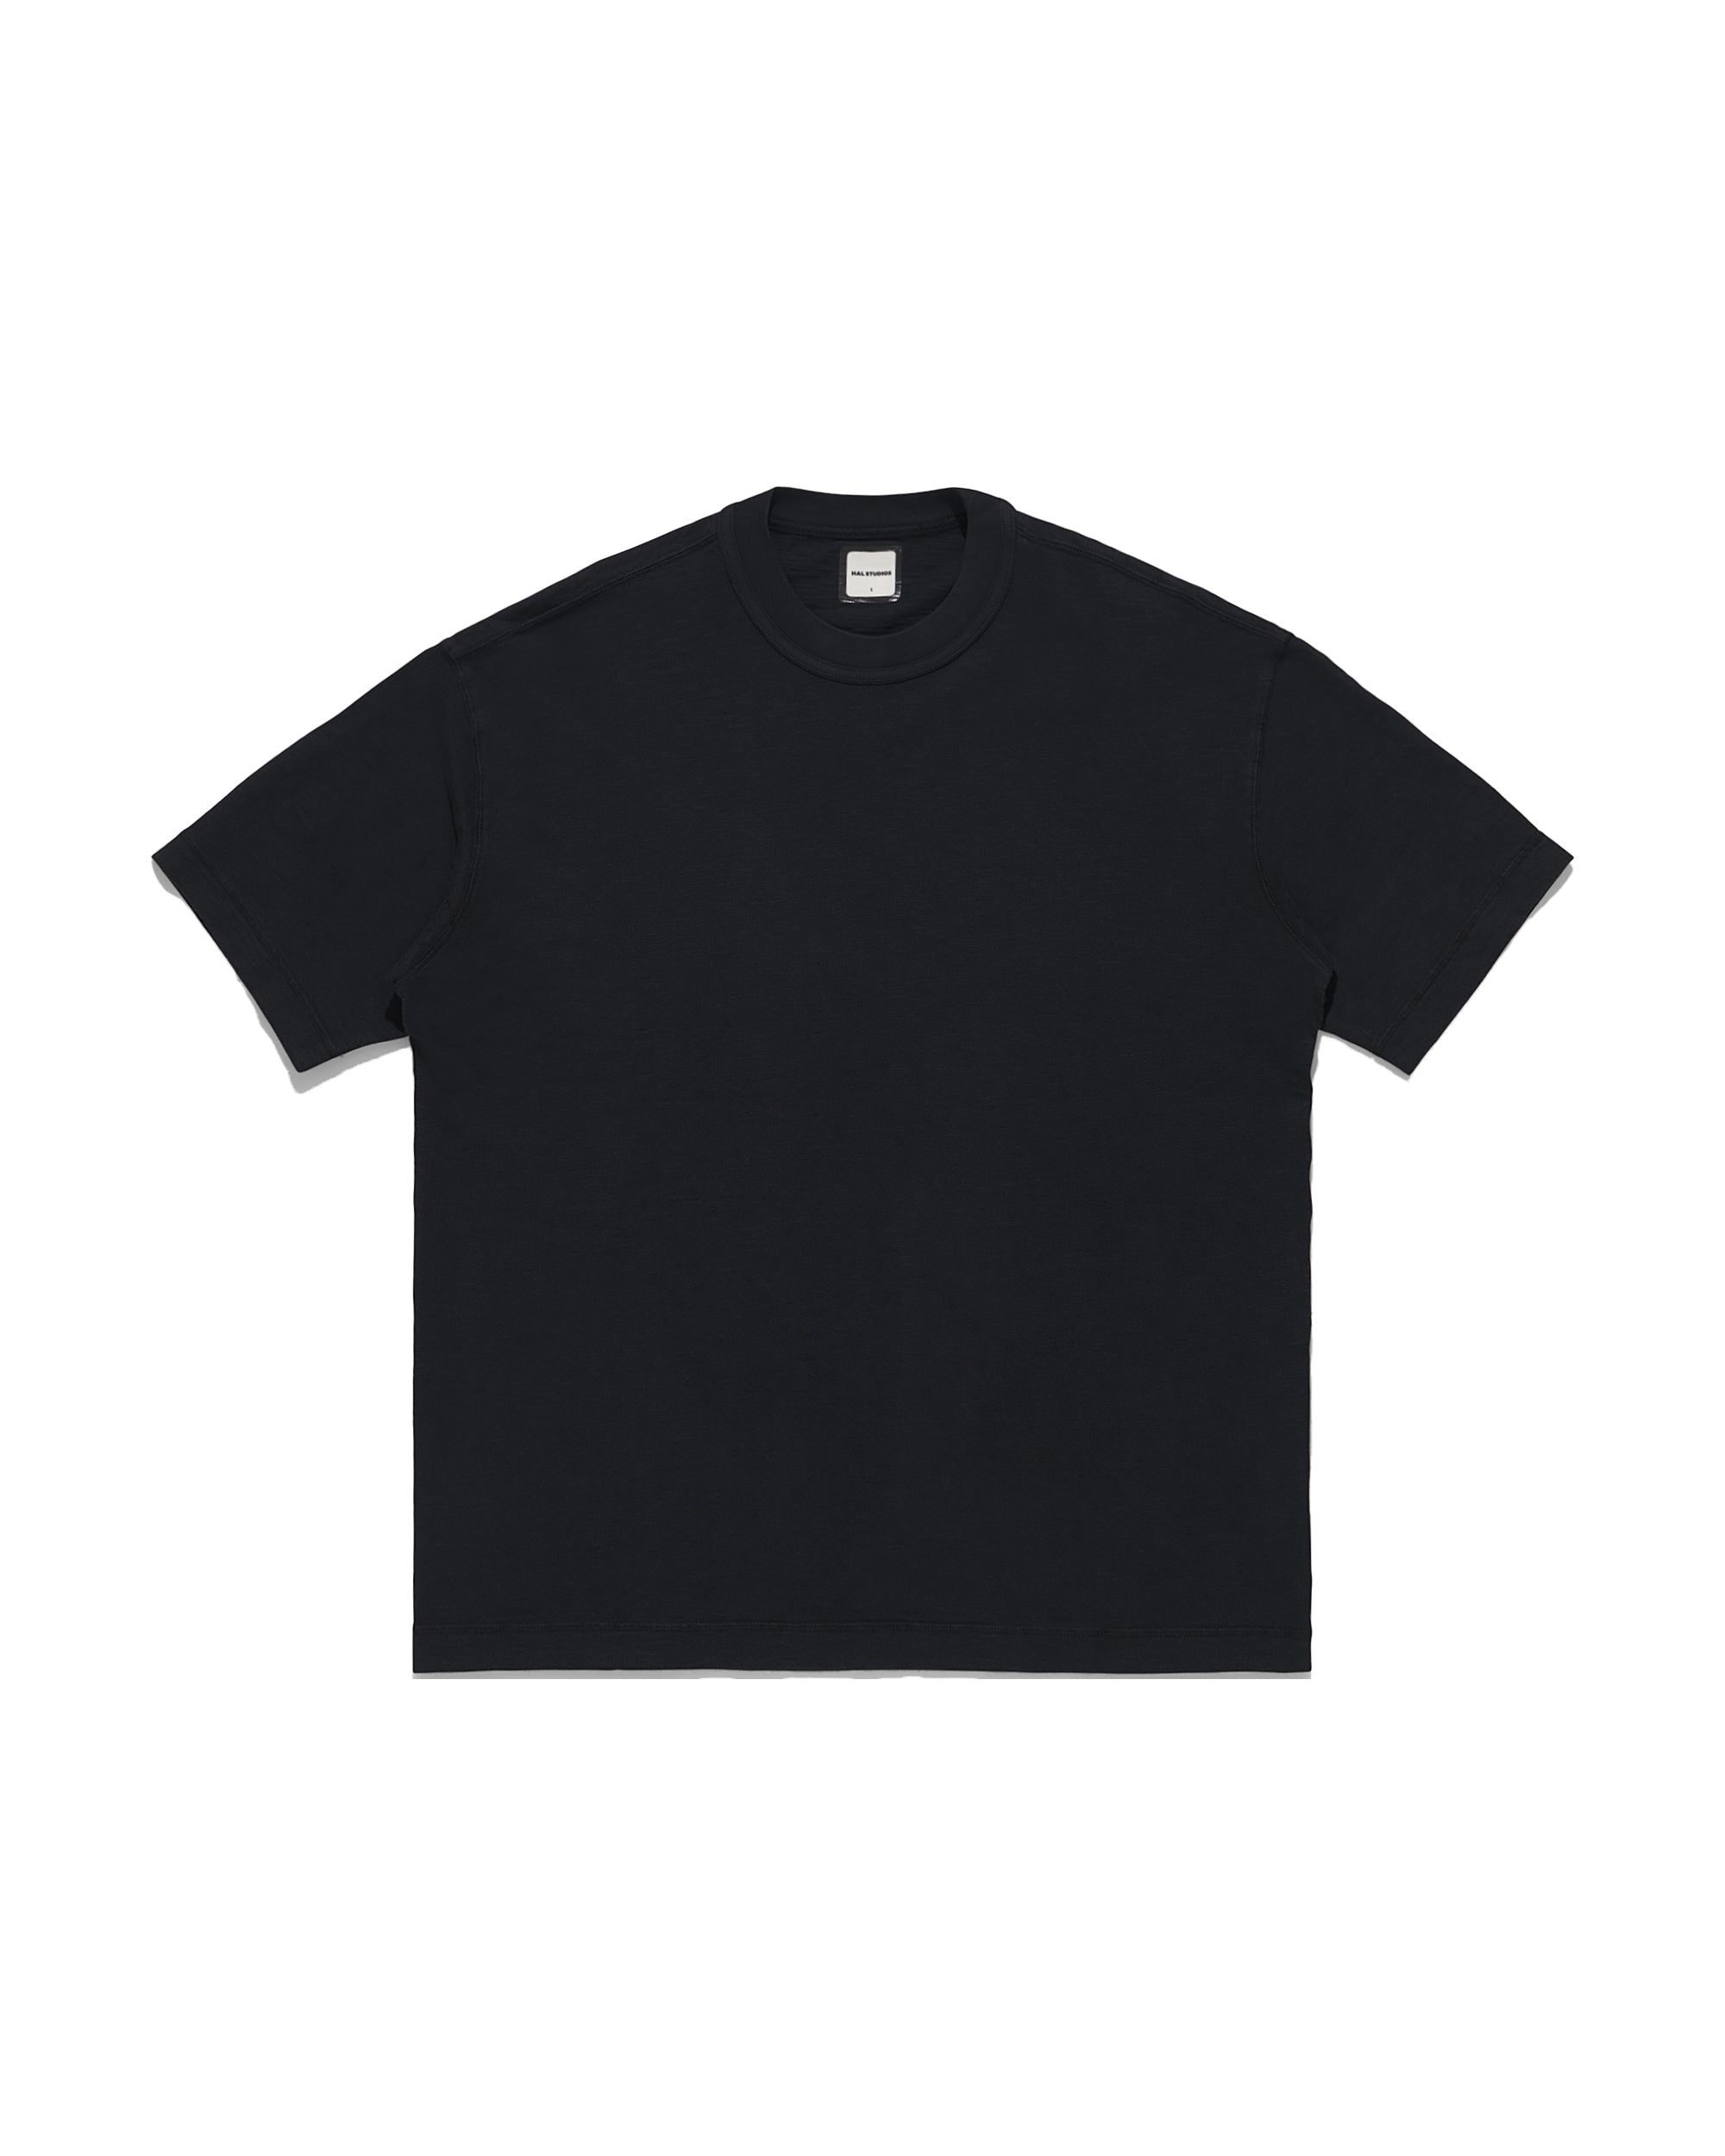 Studio Slub T-Shirt - Black